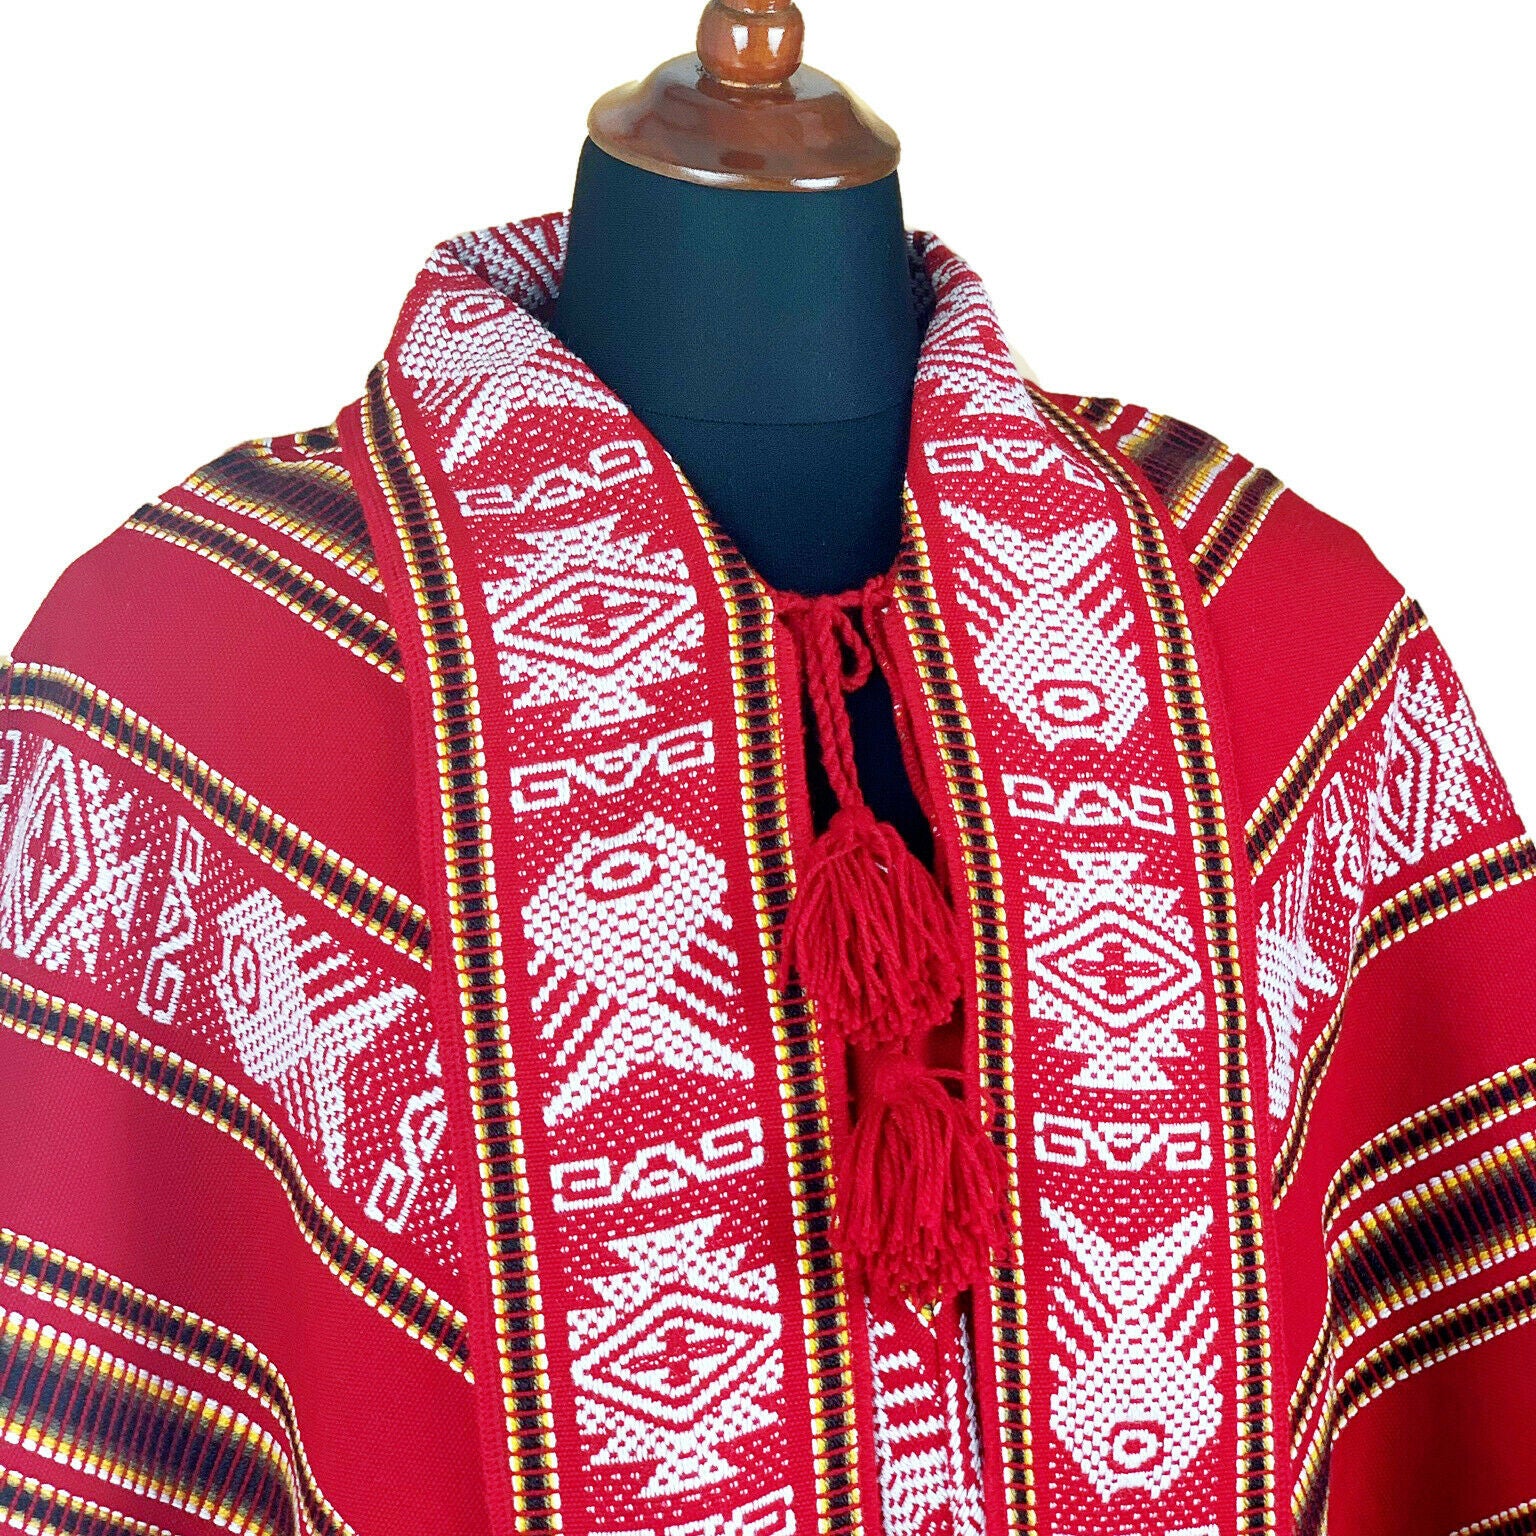 Paquintza - Alpaca wool Serape Poncho with scarf - Piranha pattern - Red - Unisex